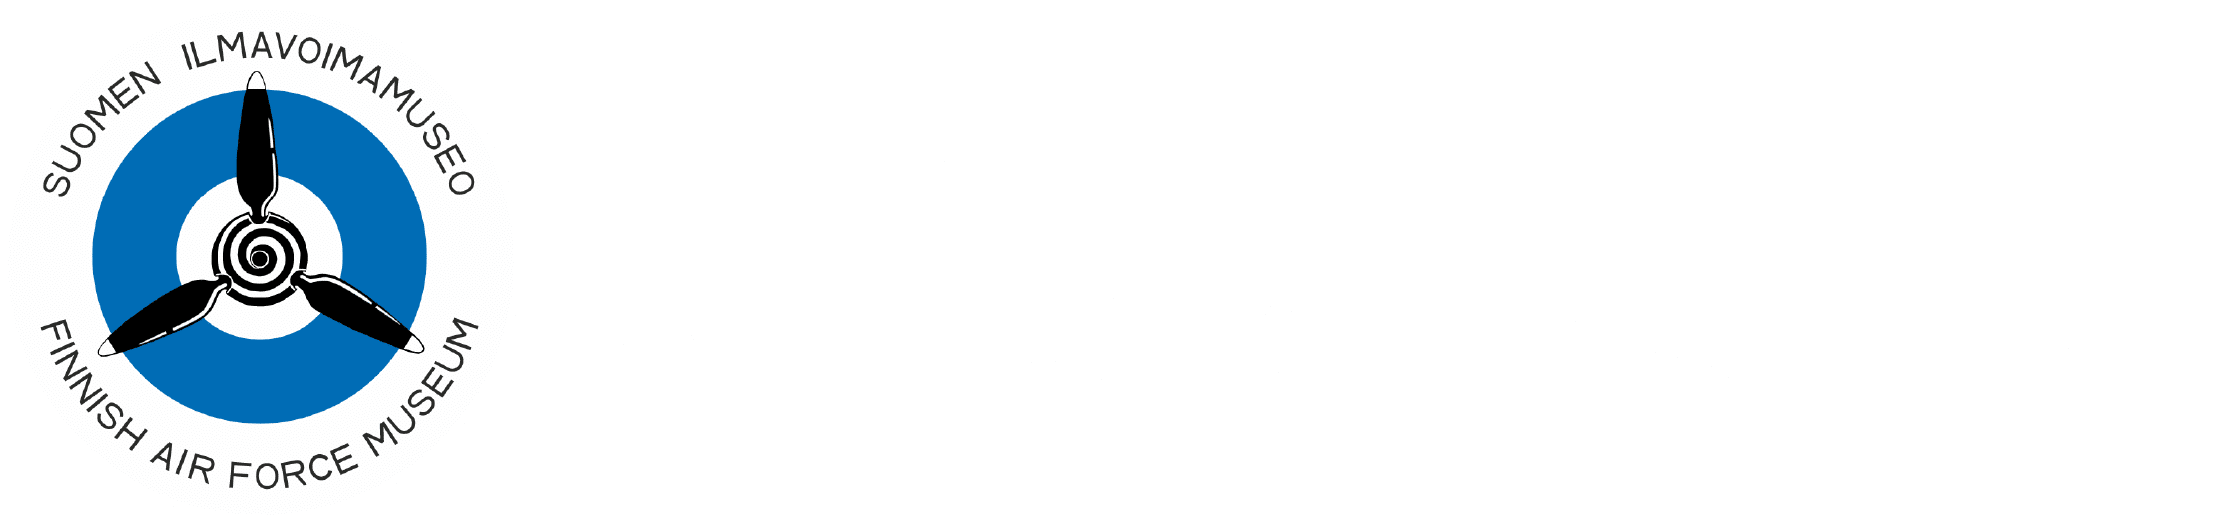 Finnish Air Force Museum logo